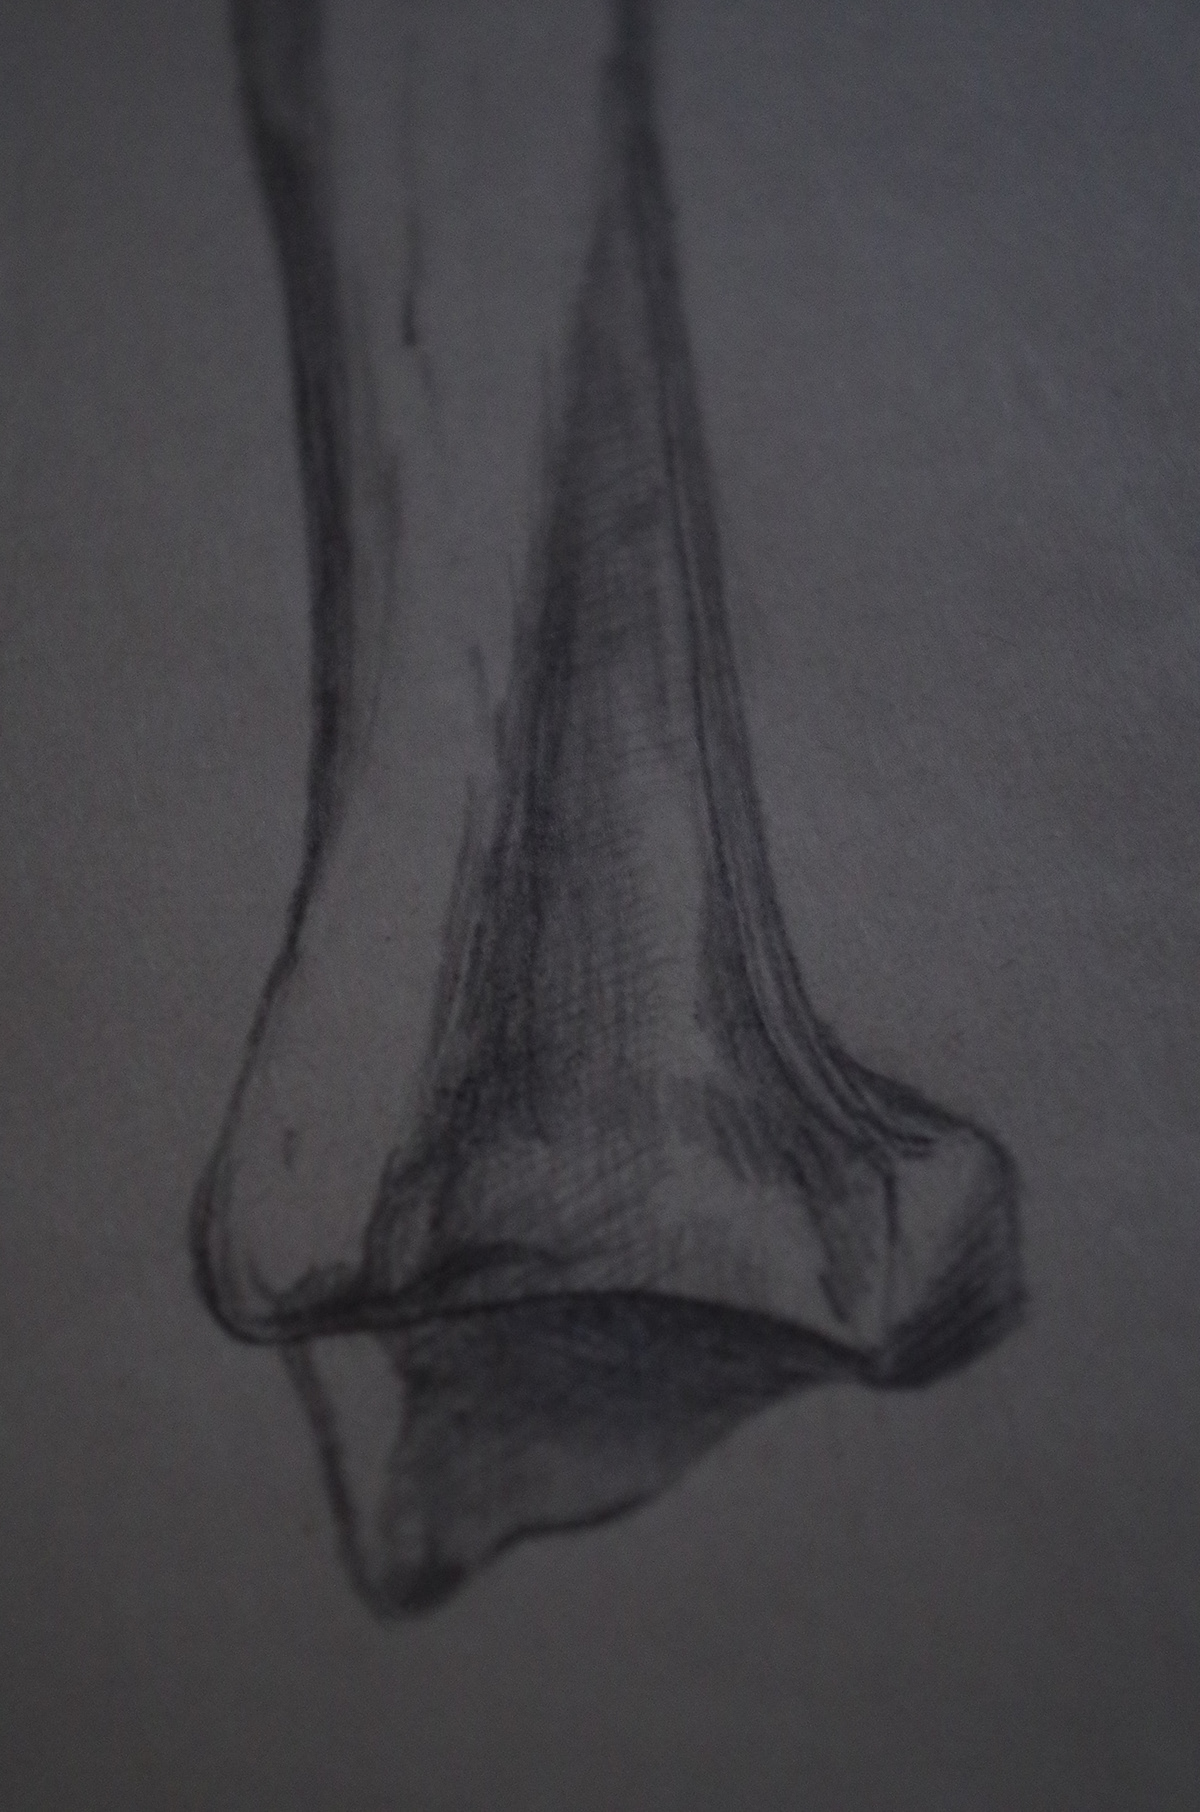 Tibia bone anatomy academic drawing study pencil pencil on paper paper black and white b/w Human Body human anatomy